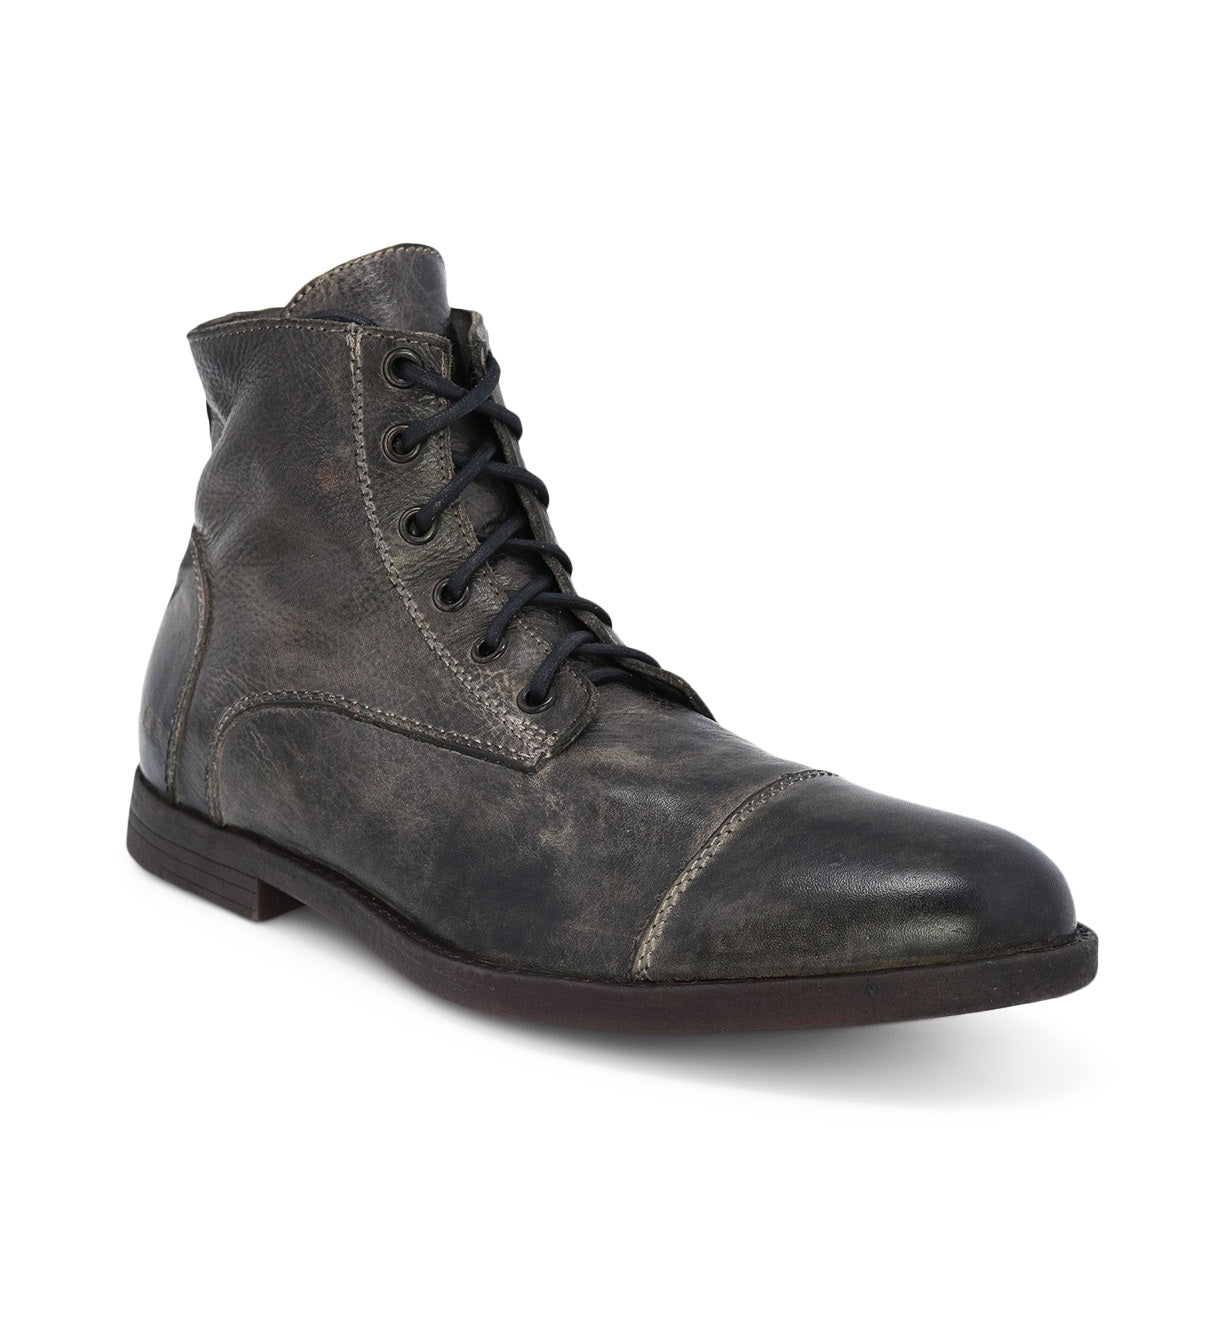 Men's grey leather lace up Bed Stu Leonardo boots.